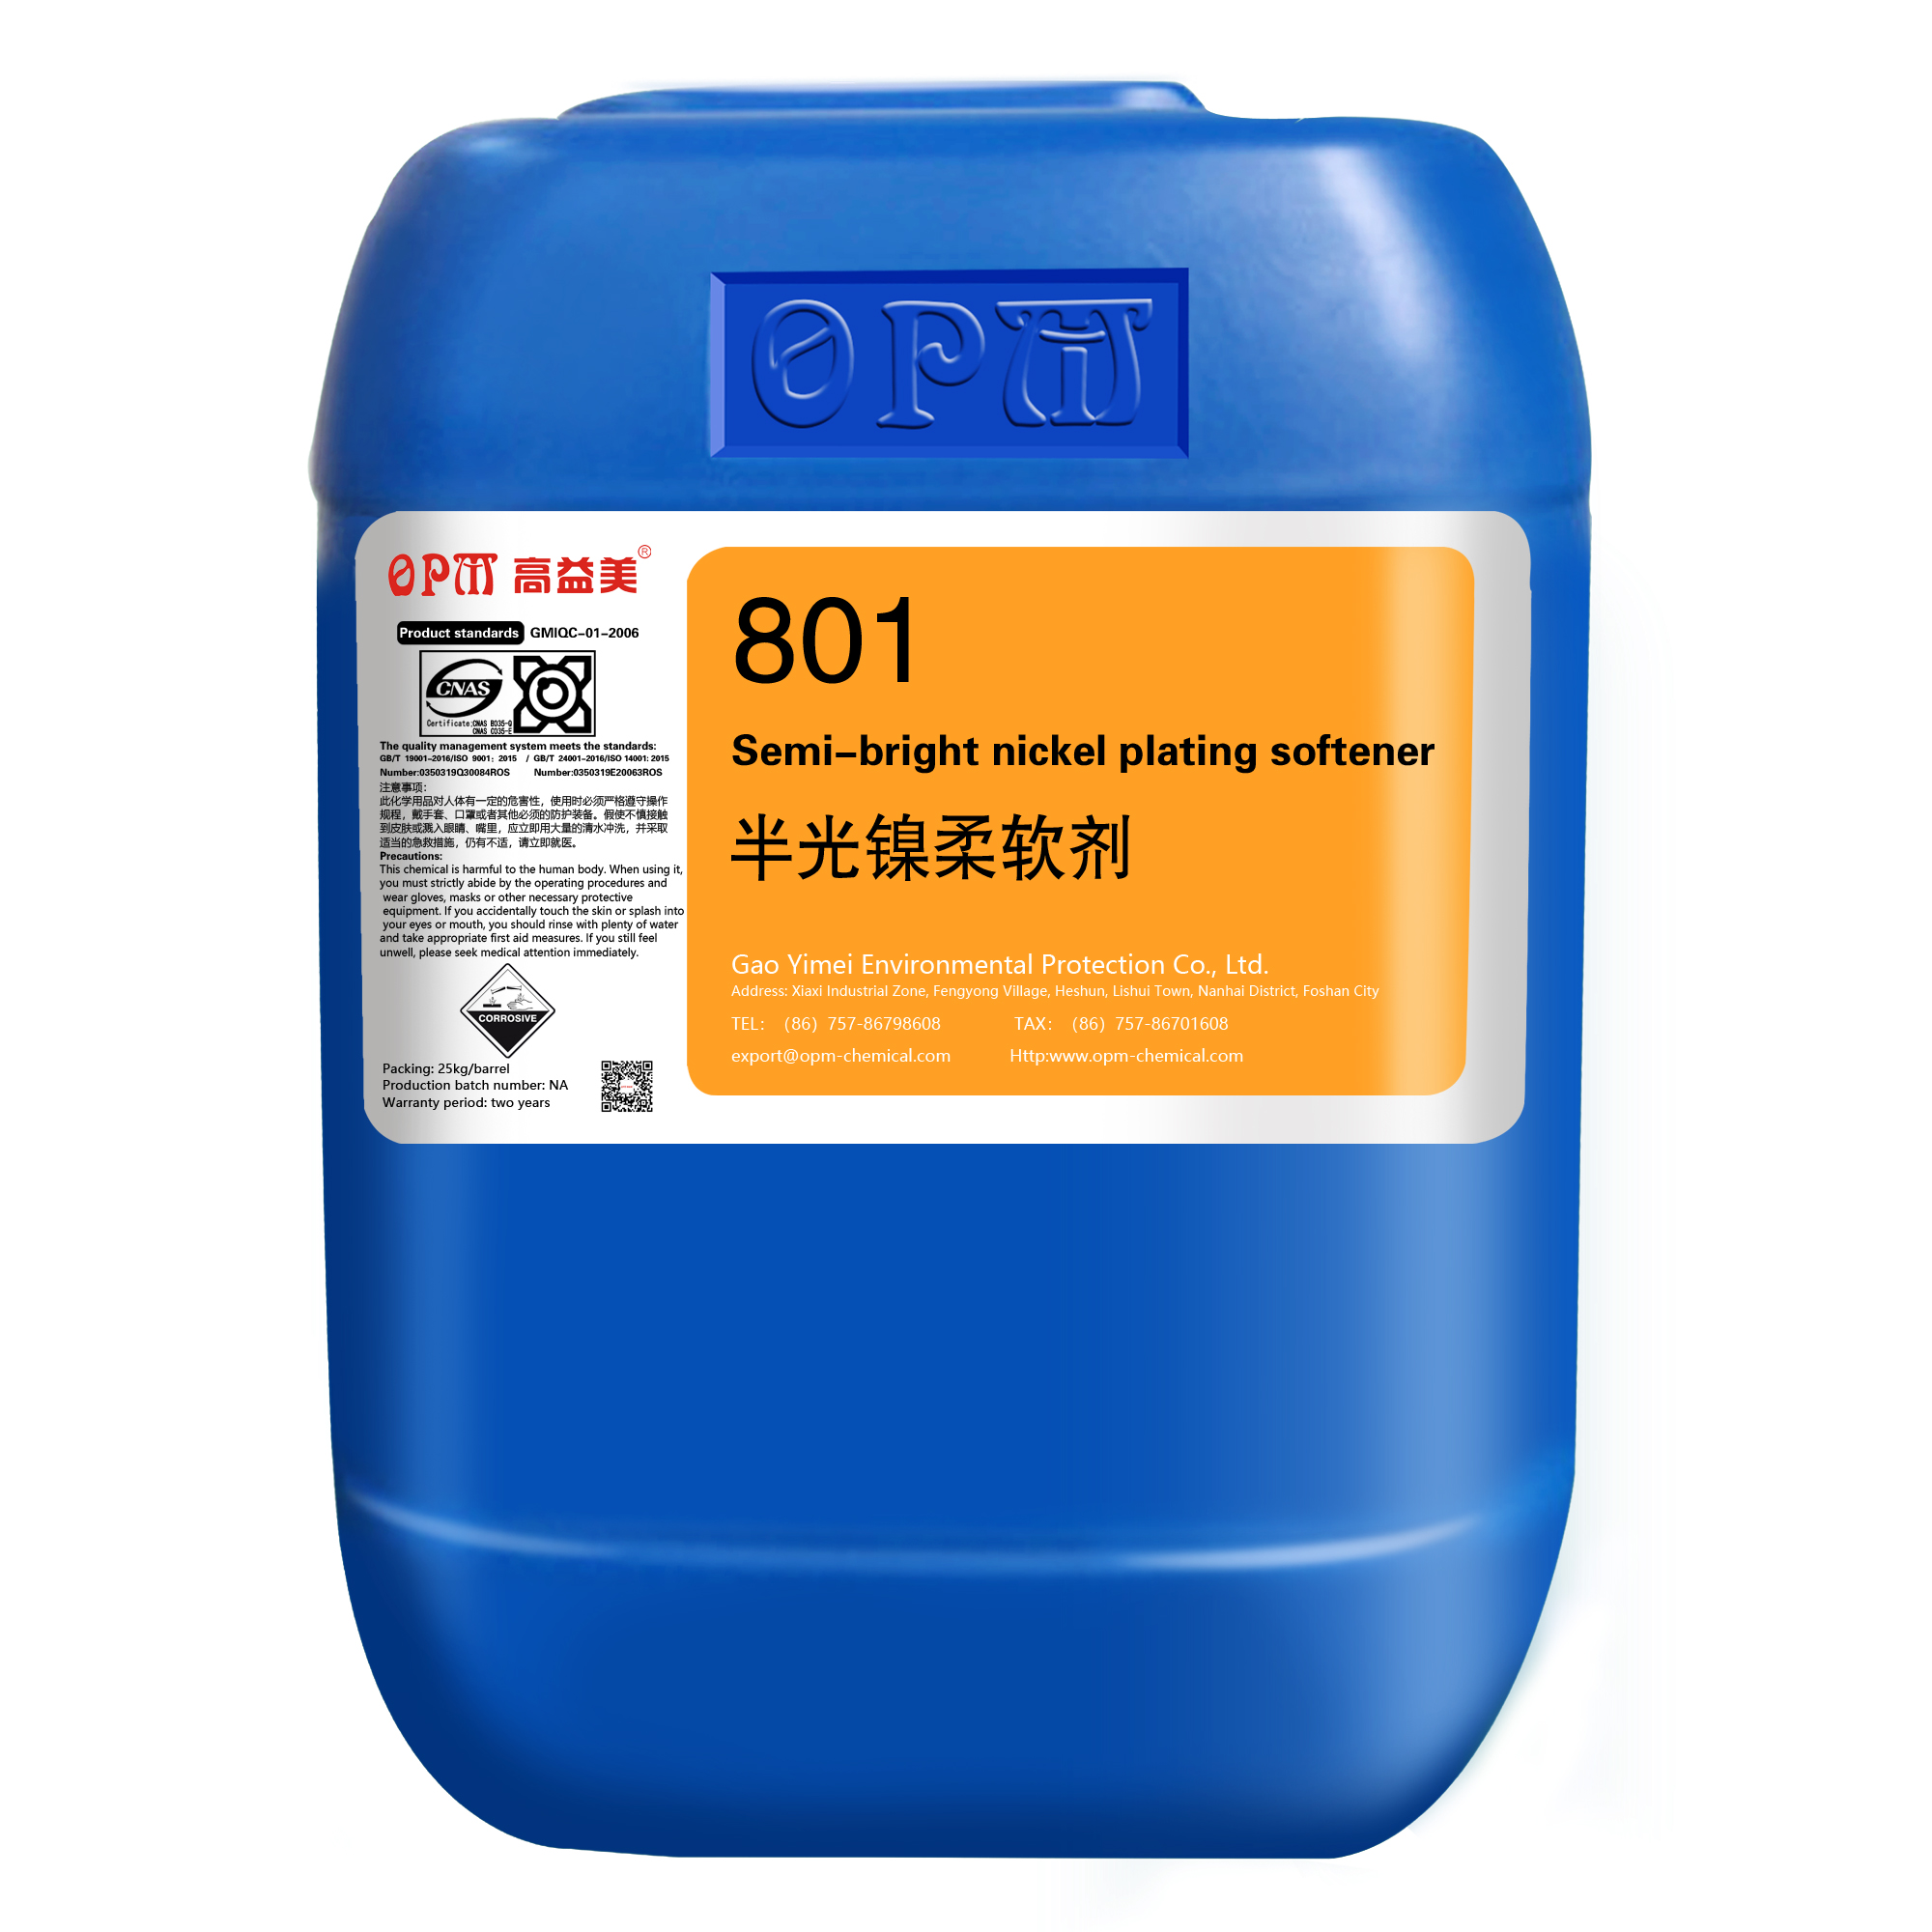 801 Semi-bright nickel plating softener